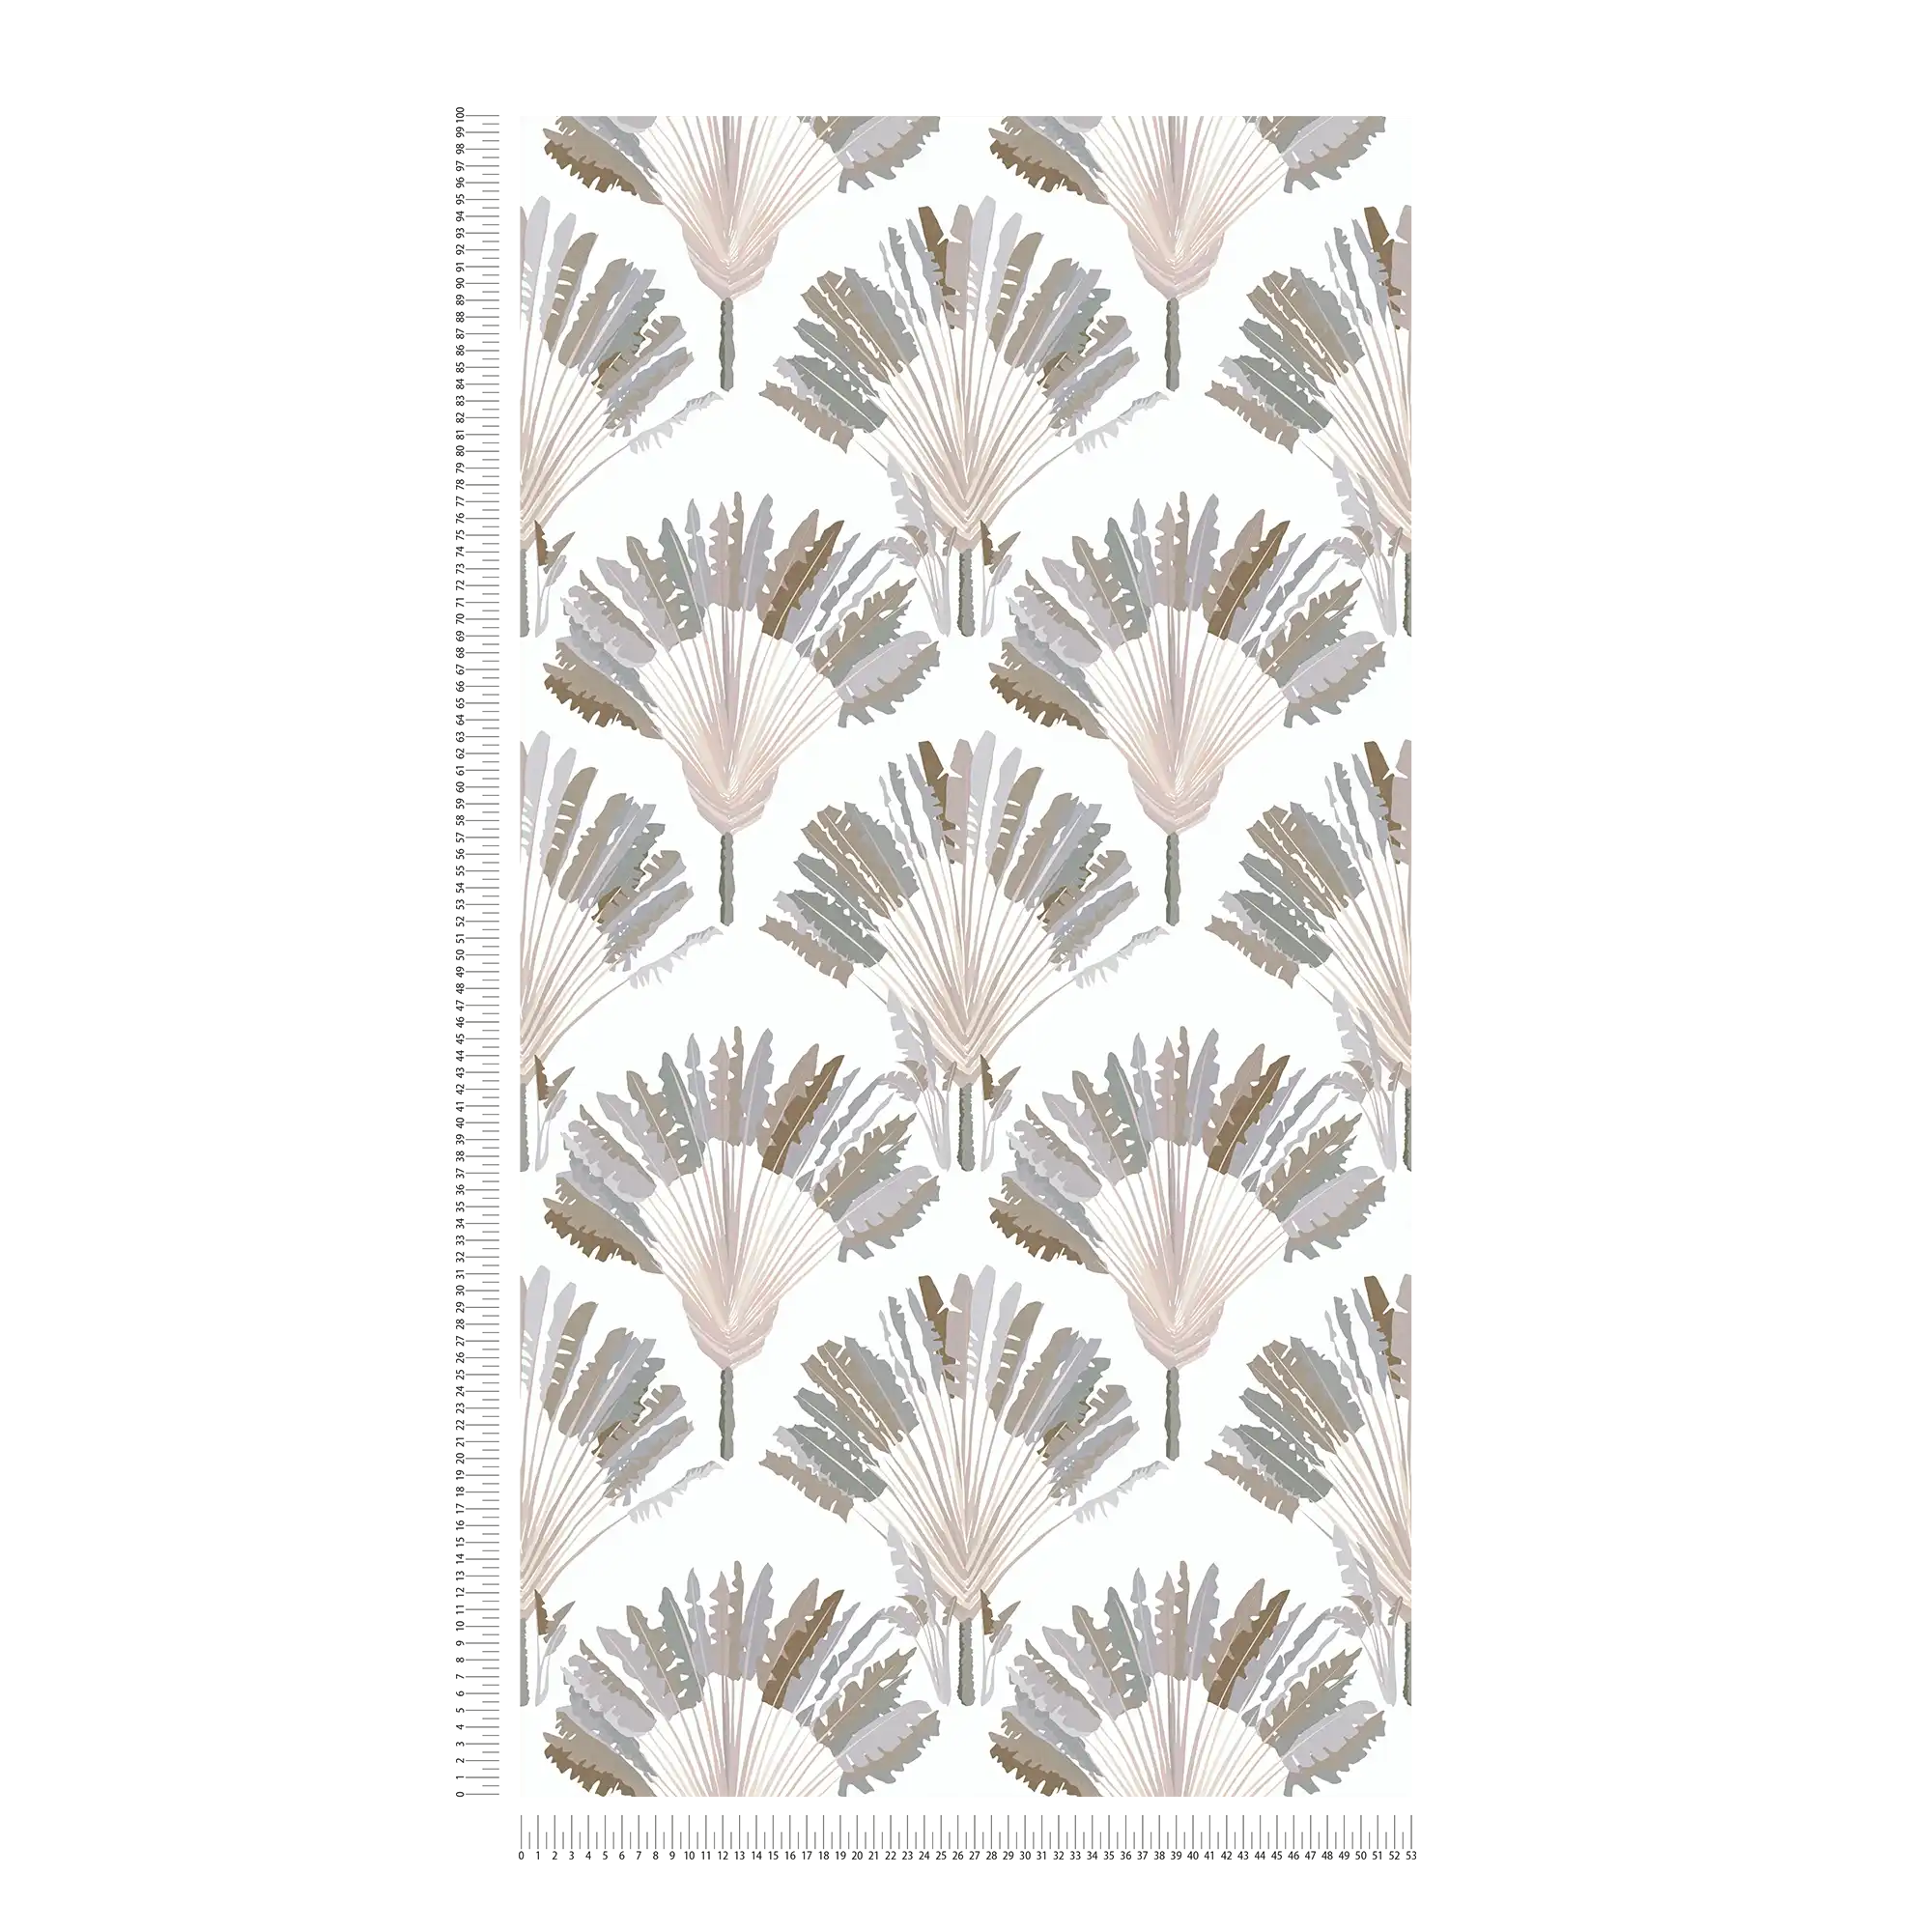             wallpaper grey beige with palm pattern & block design - grey, white, brown
        